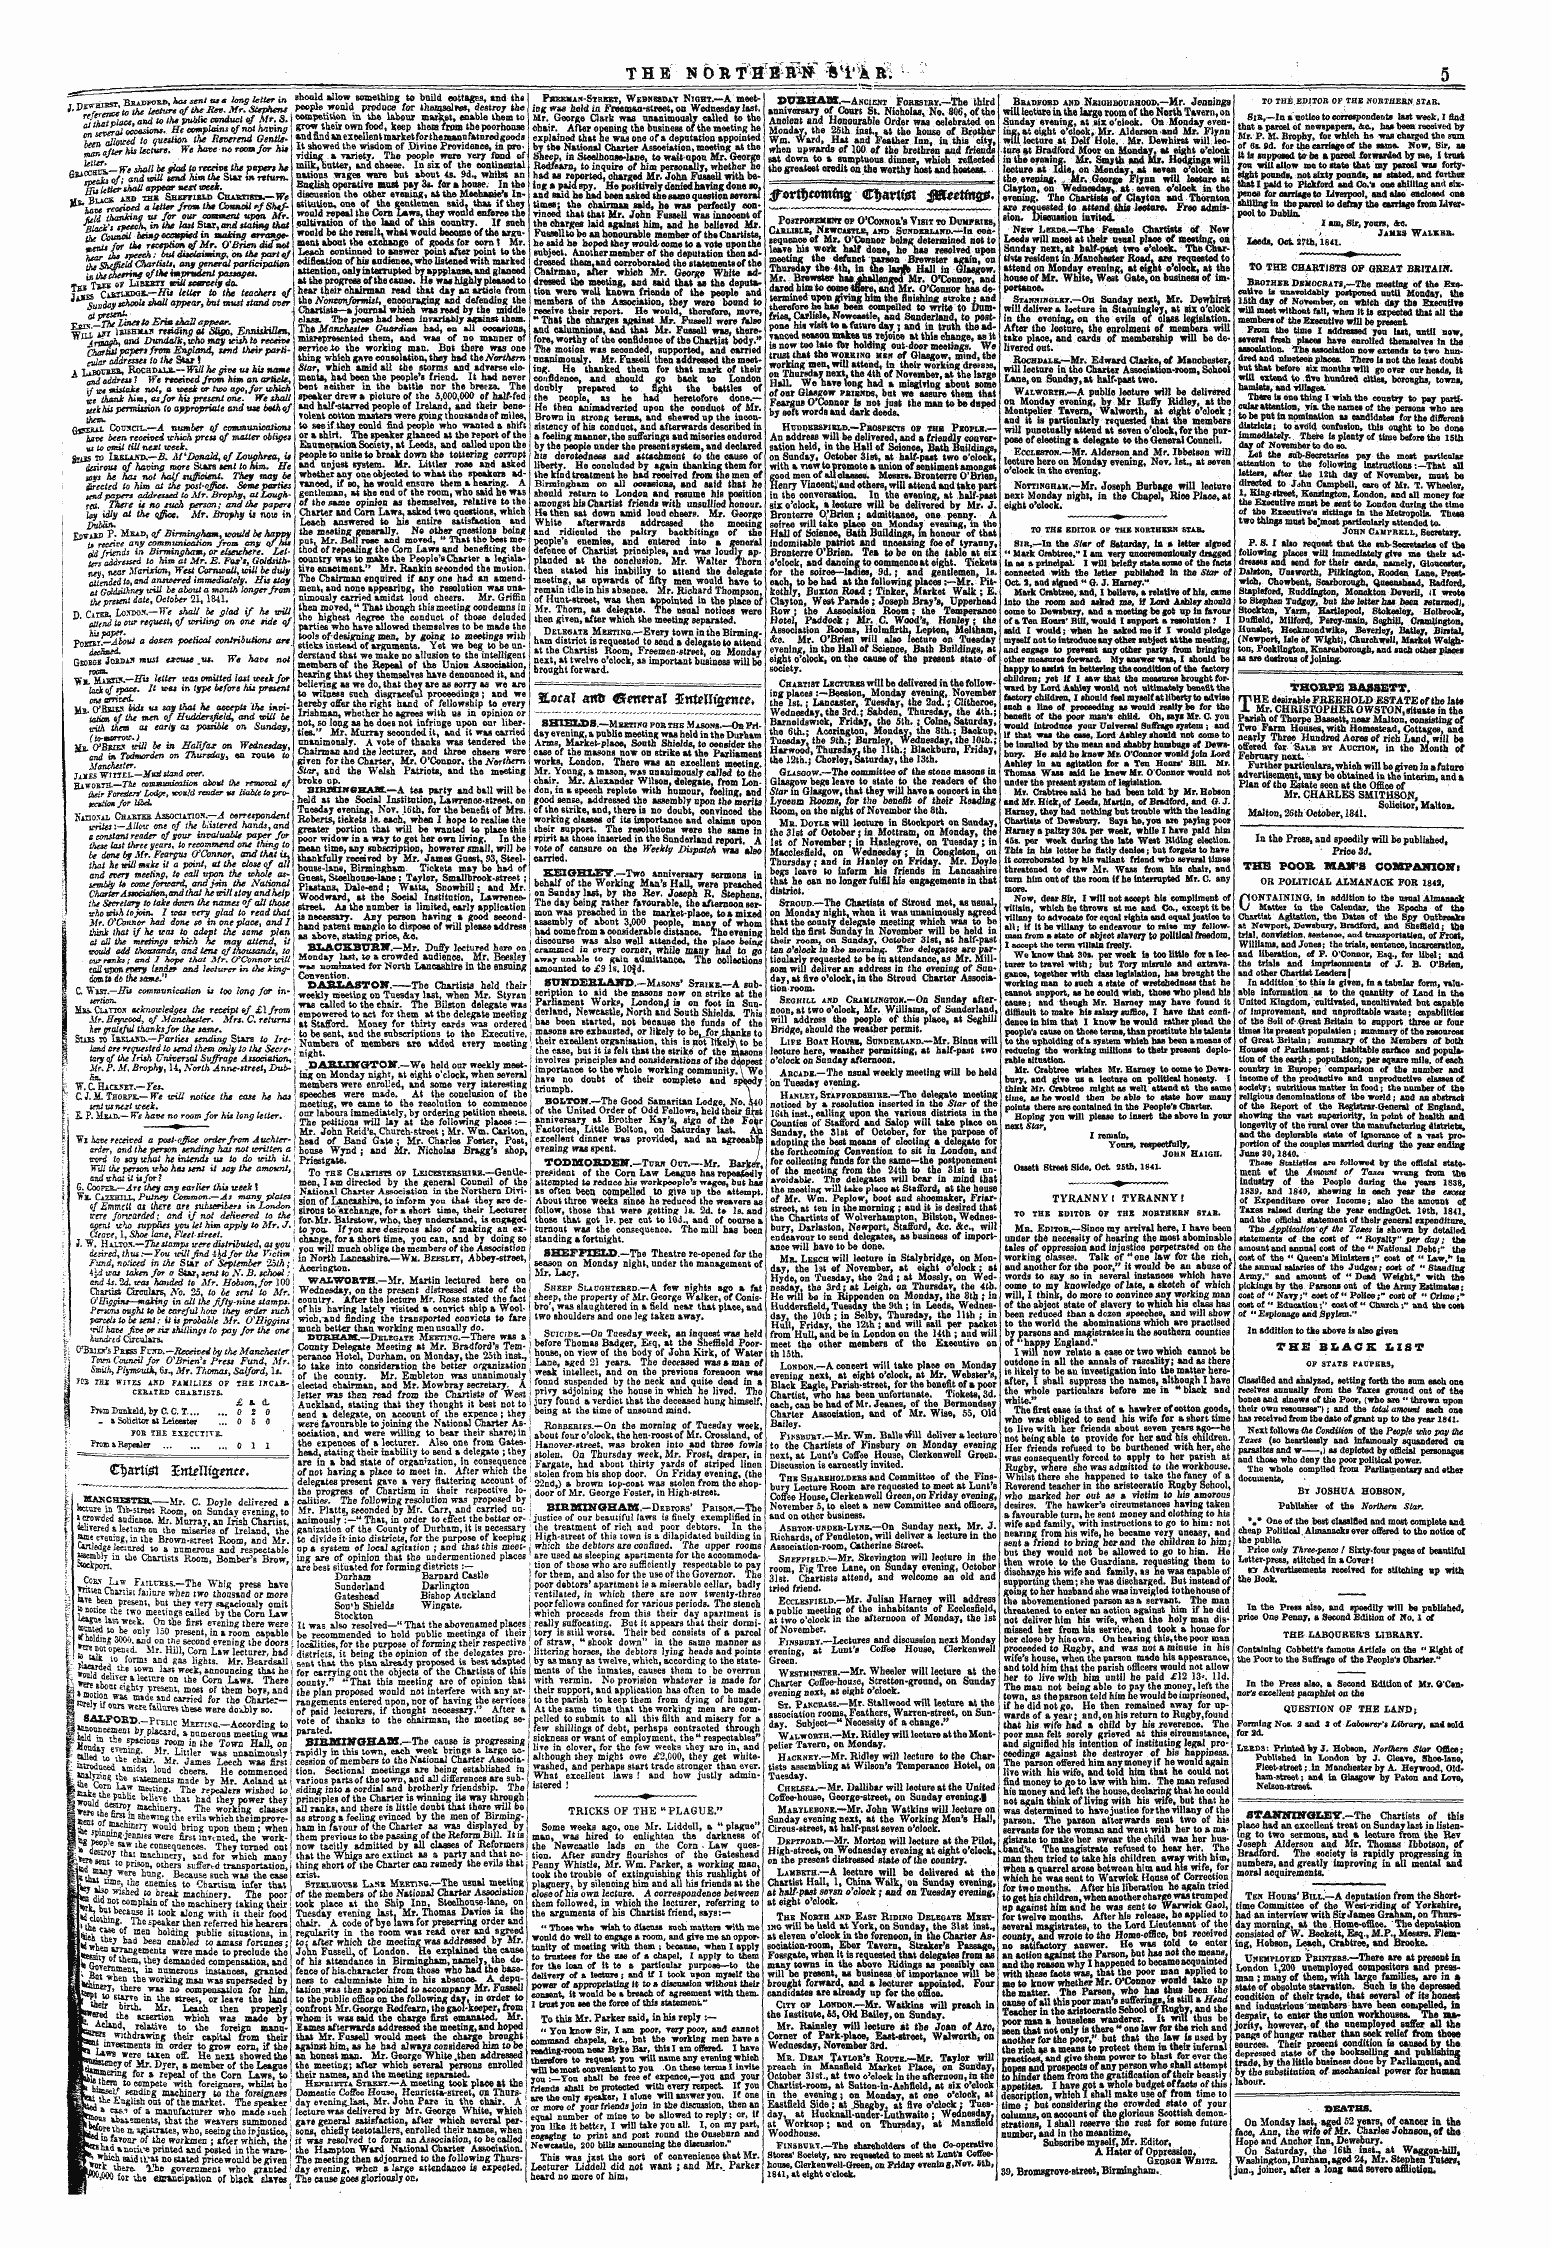 Northern Star (1837-1852): jS F Y, 3rd edition - €$Artt# Zsfetlisente.